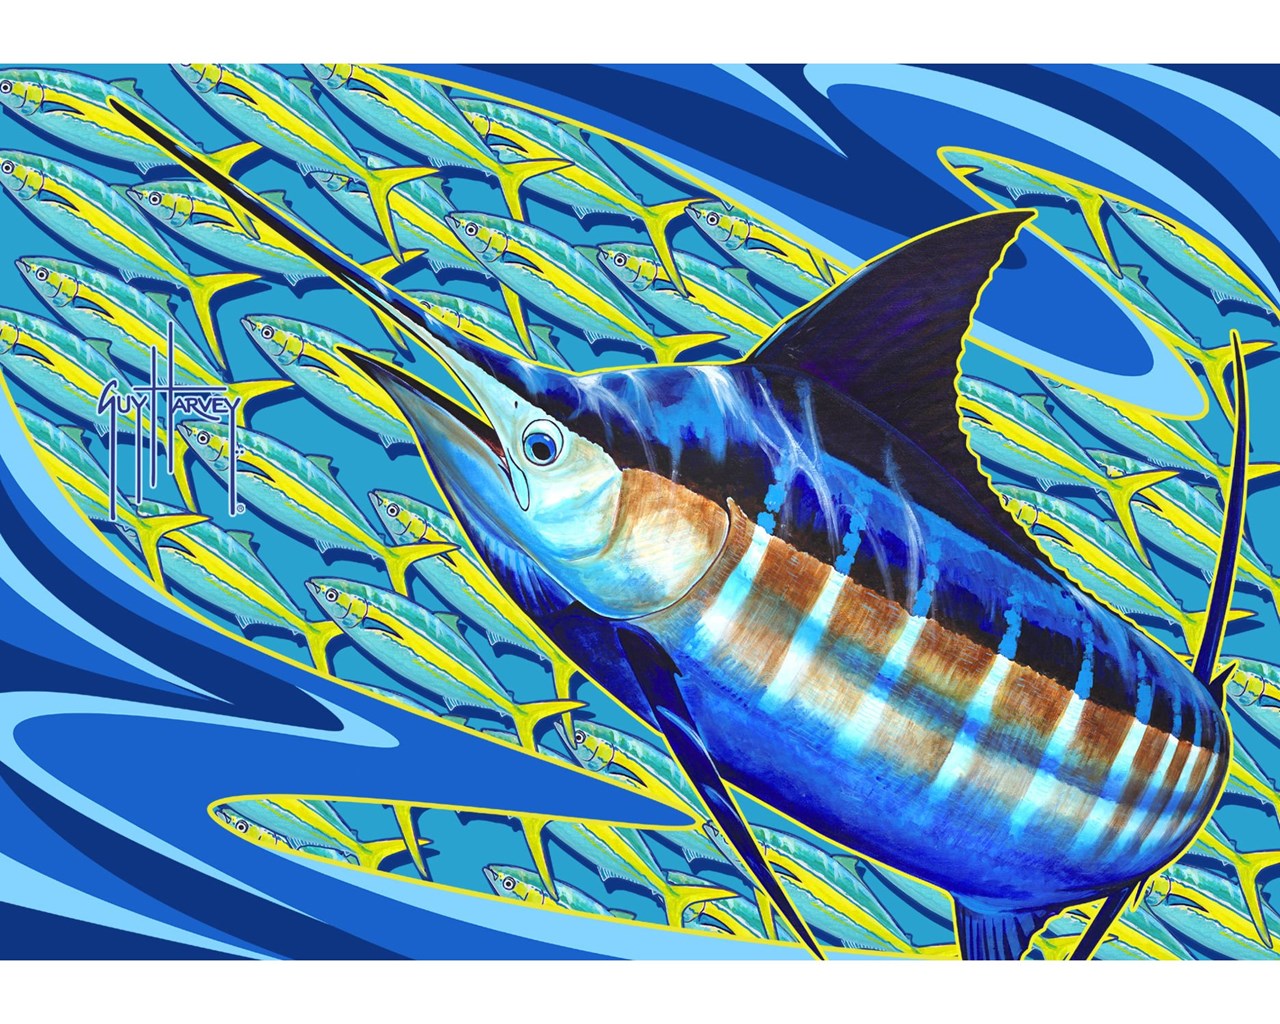 ragazzo harvey wallpaper,pesce,pesce,marlin blu atlantico,marlin,biologia marina